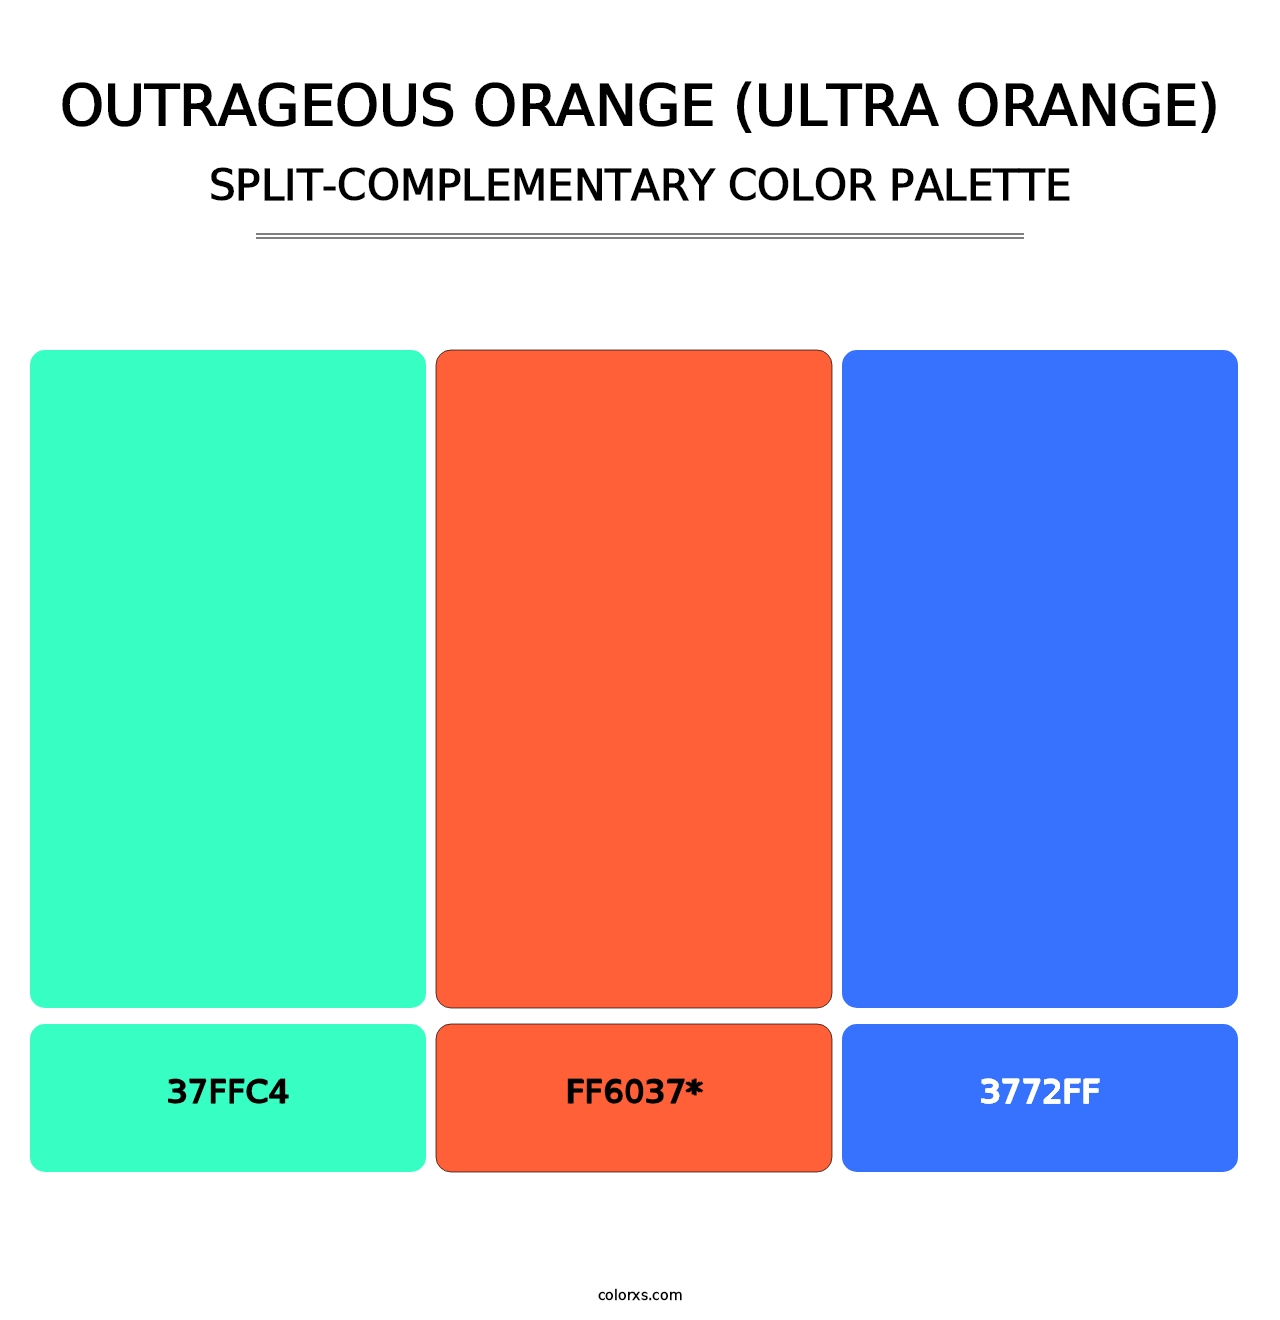 Outrageous Orange (Ultra Orange) - Split-Complementary Color Palette